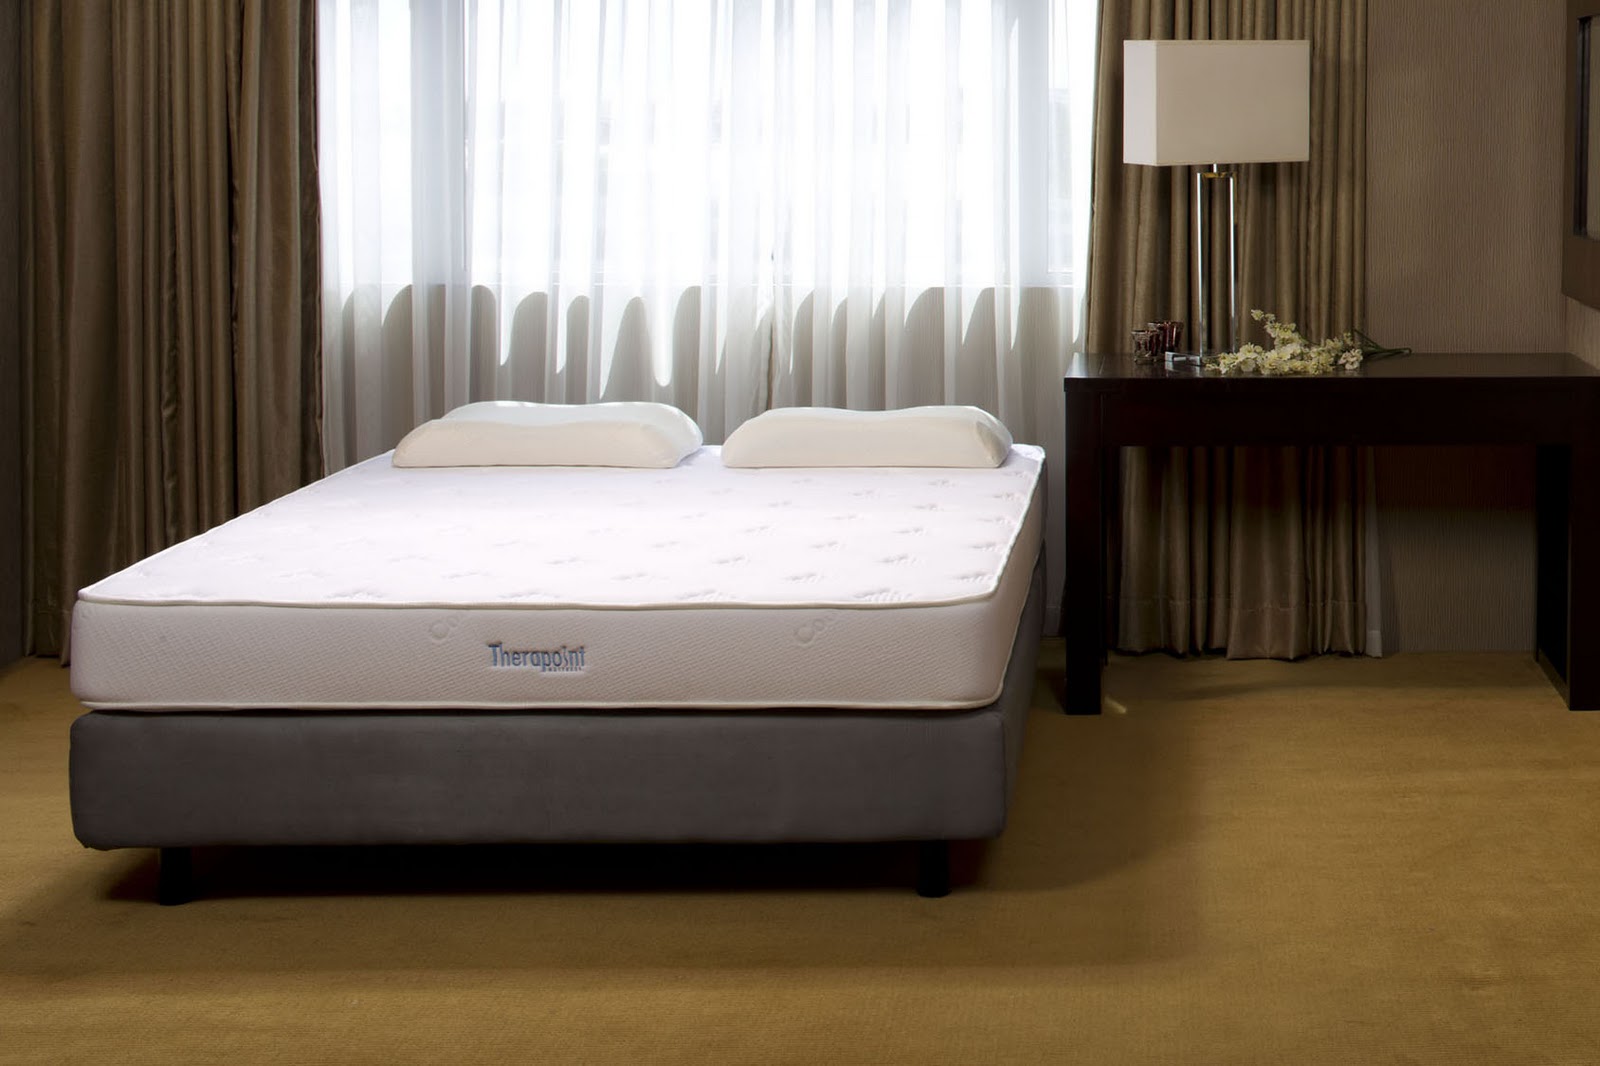 uratex bed mattress price